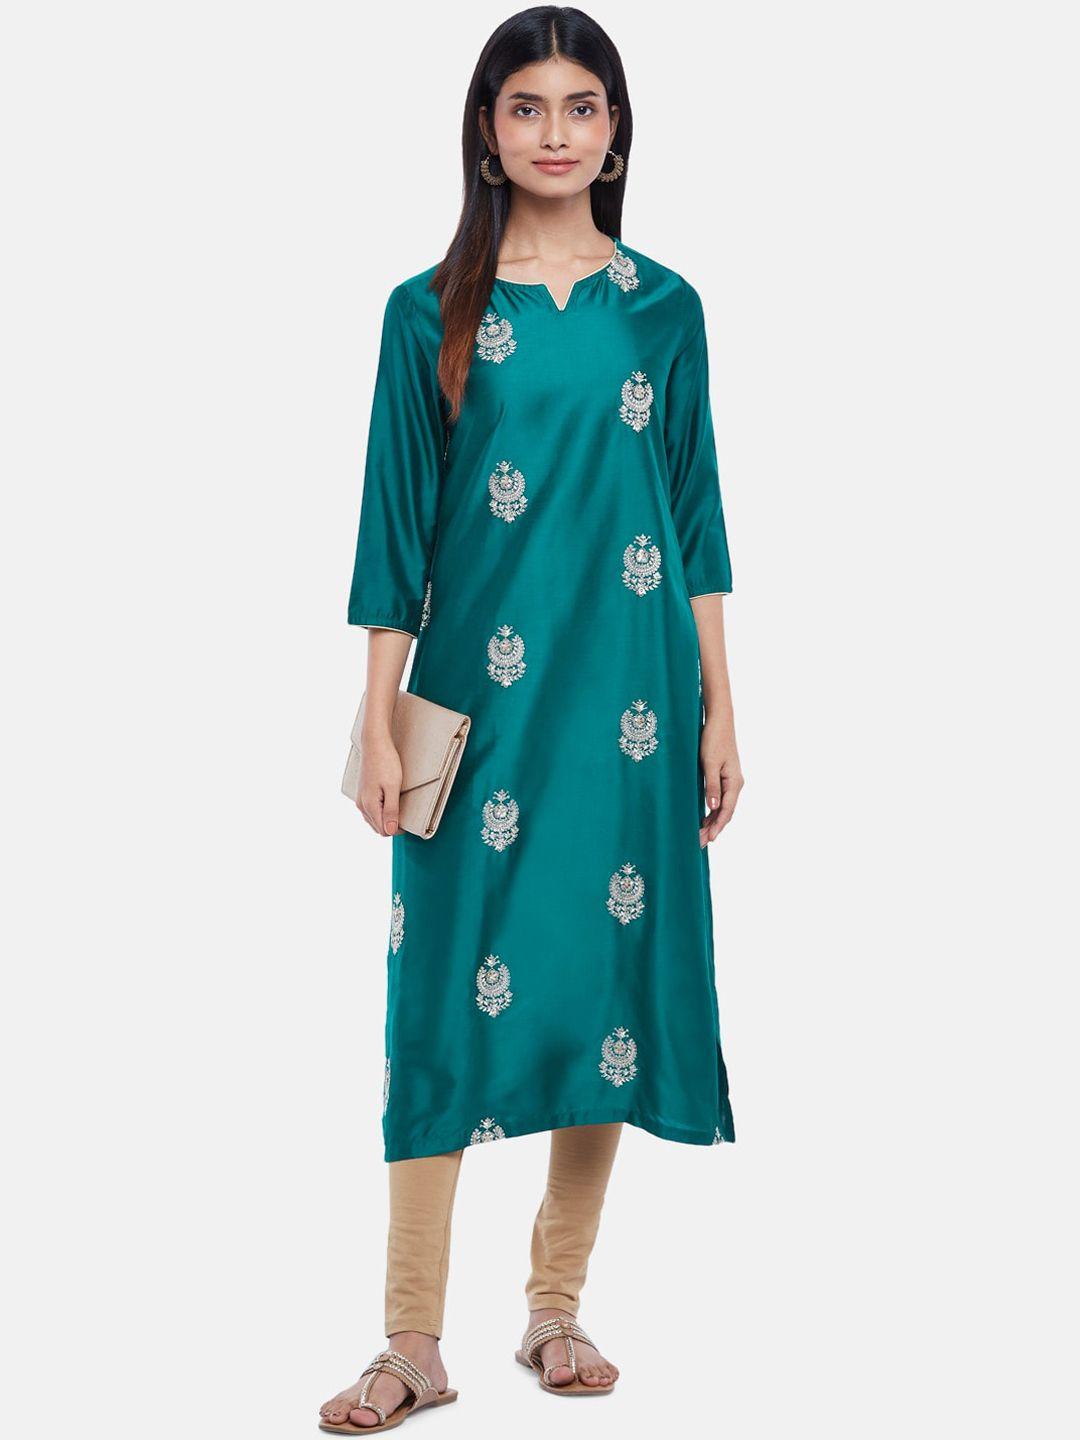 rangmanch by pantaloons women green ethnic motifs embellished kurta